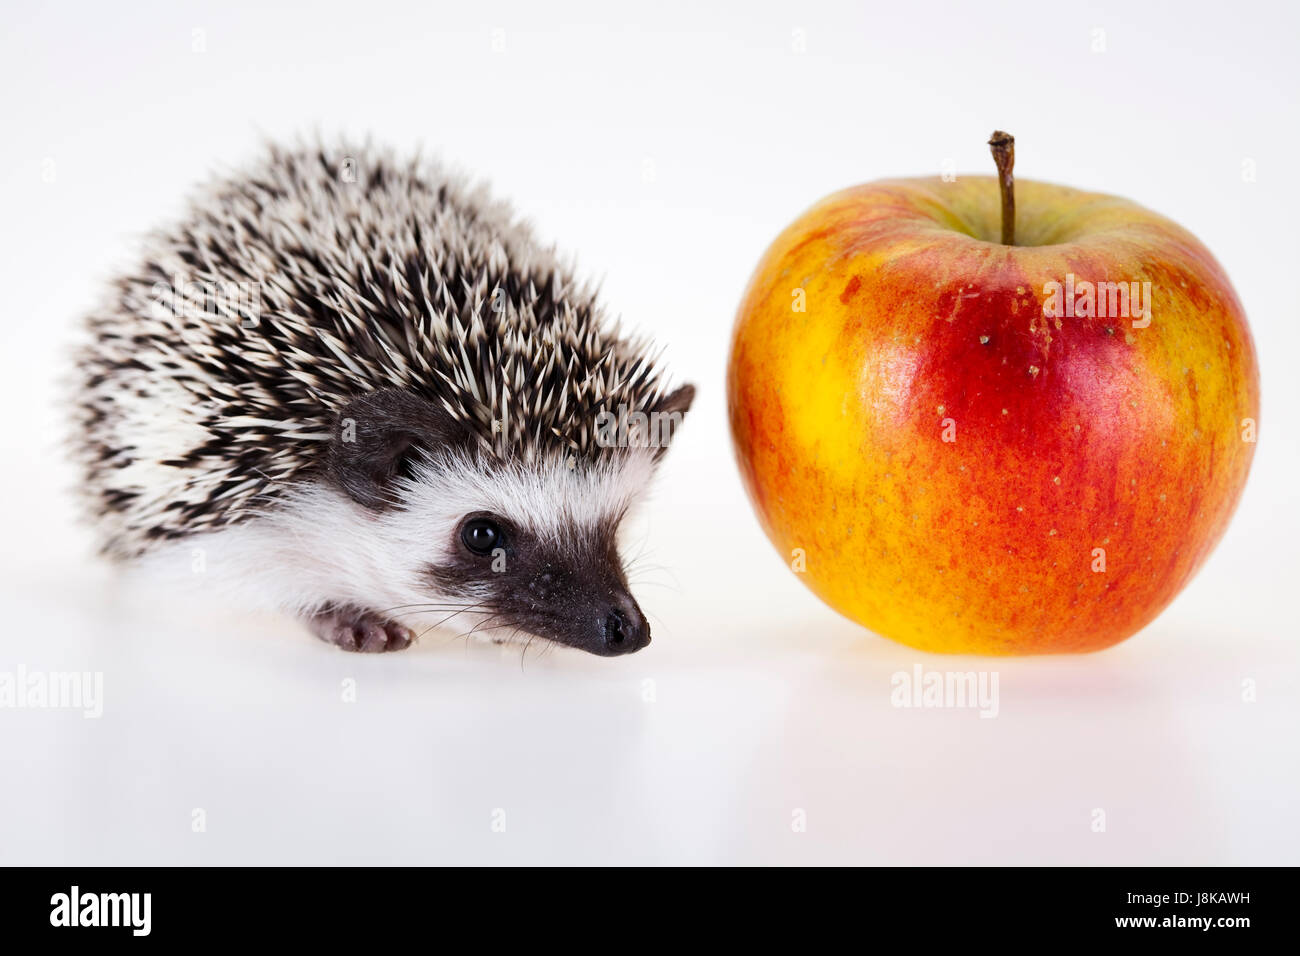 animal, mammal, creature, wildlife, hedge, hedgehog, nature, fall, autumn, Stock Photo